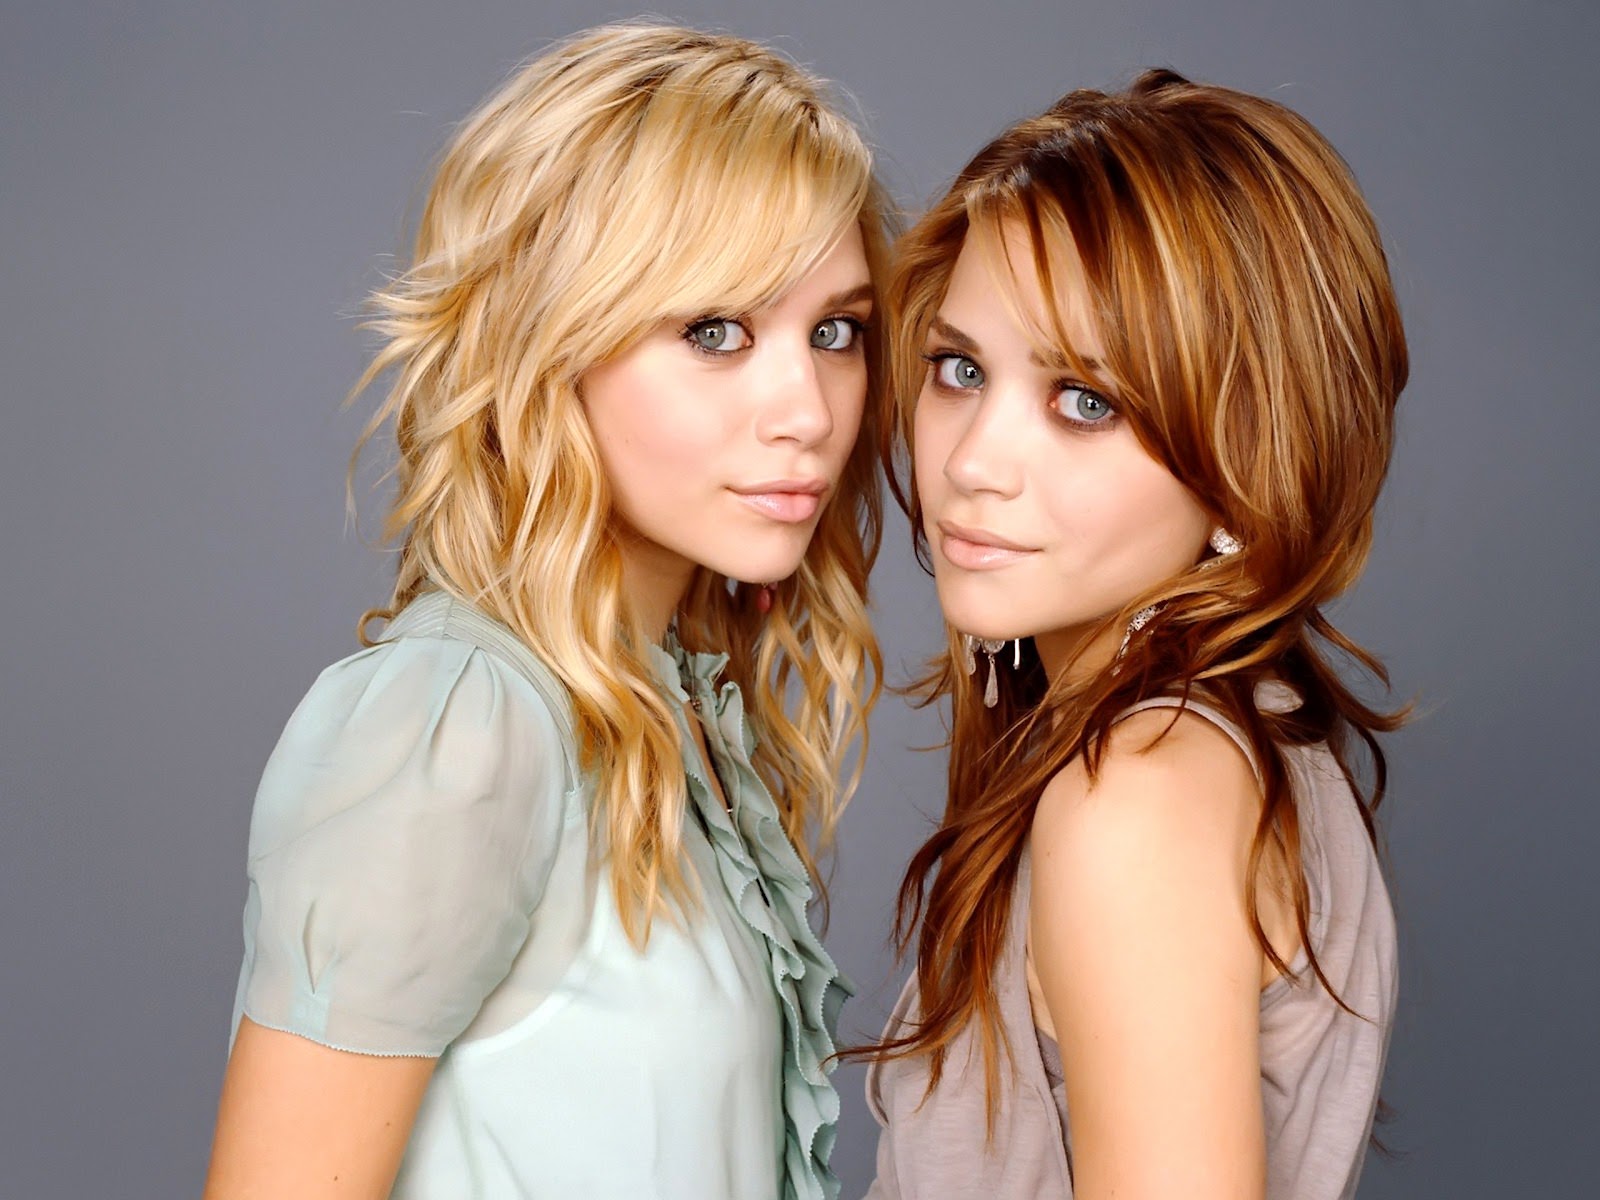 Olsen Twins #5